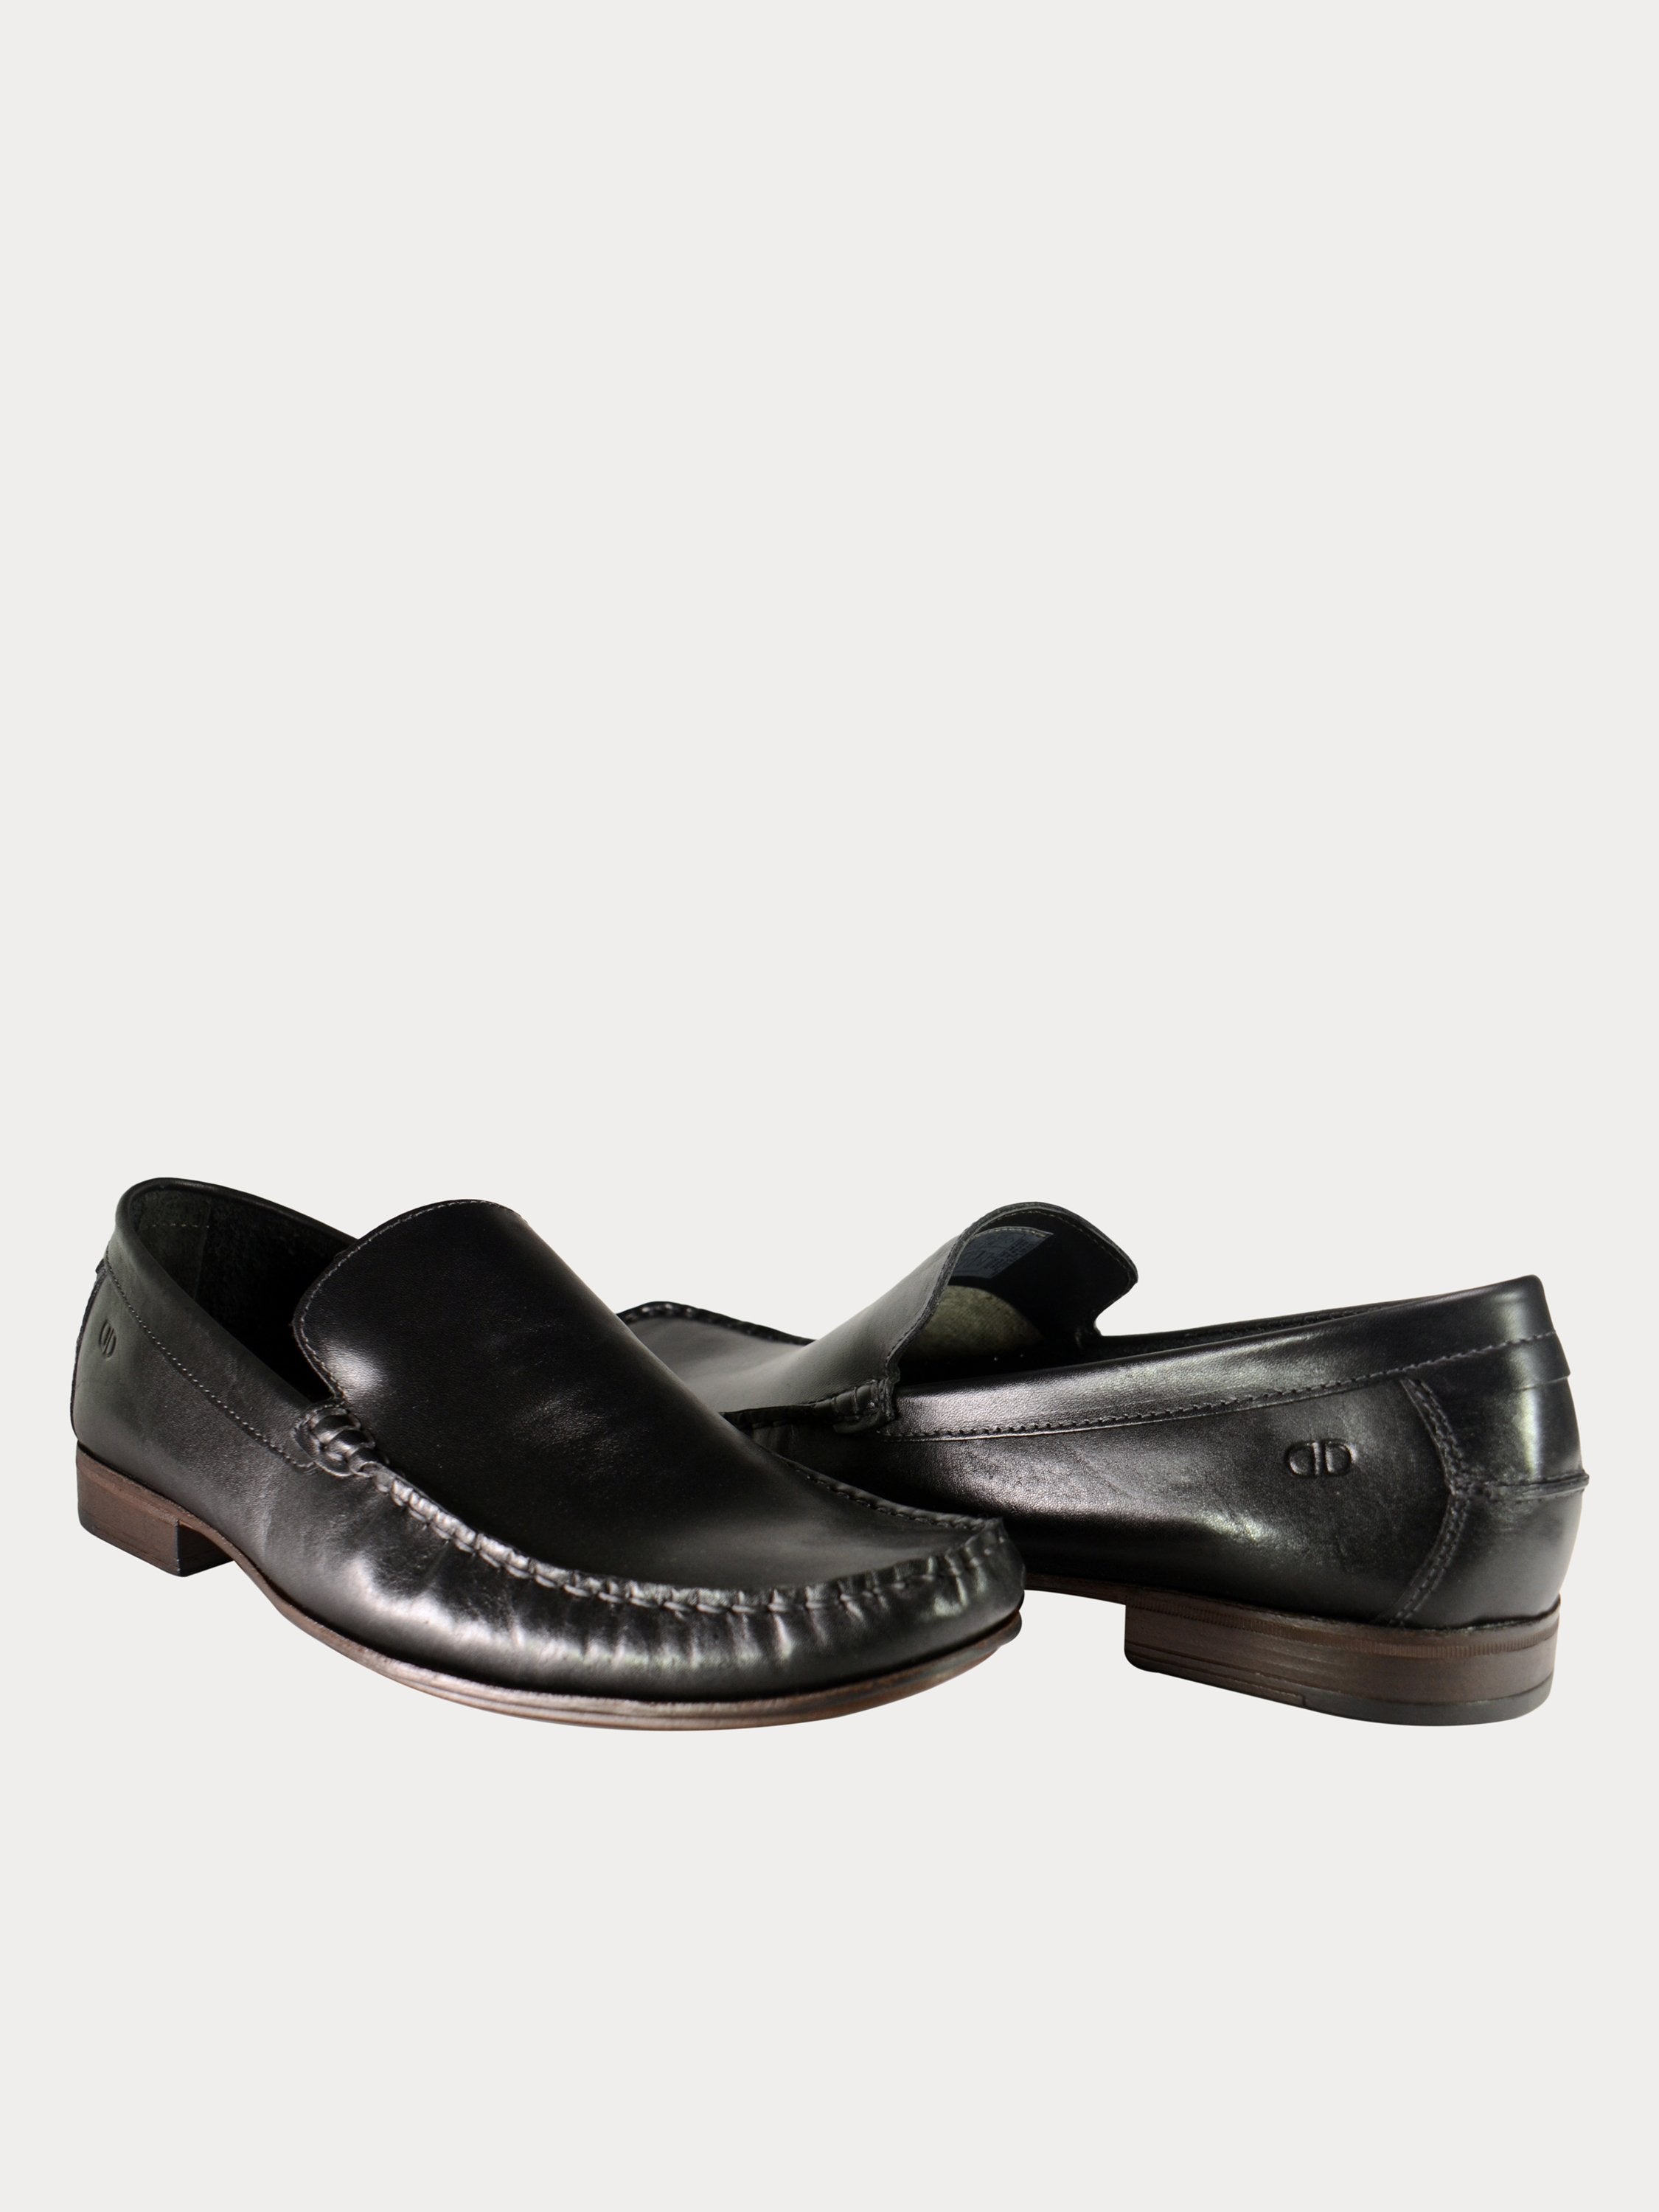 Democrata Cruiser Men's Formal Leather Shoes #color_Black